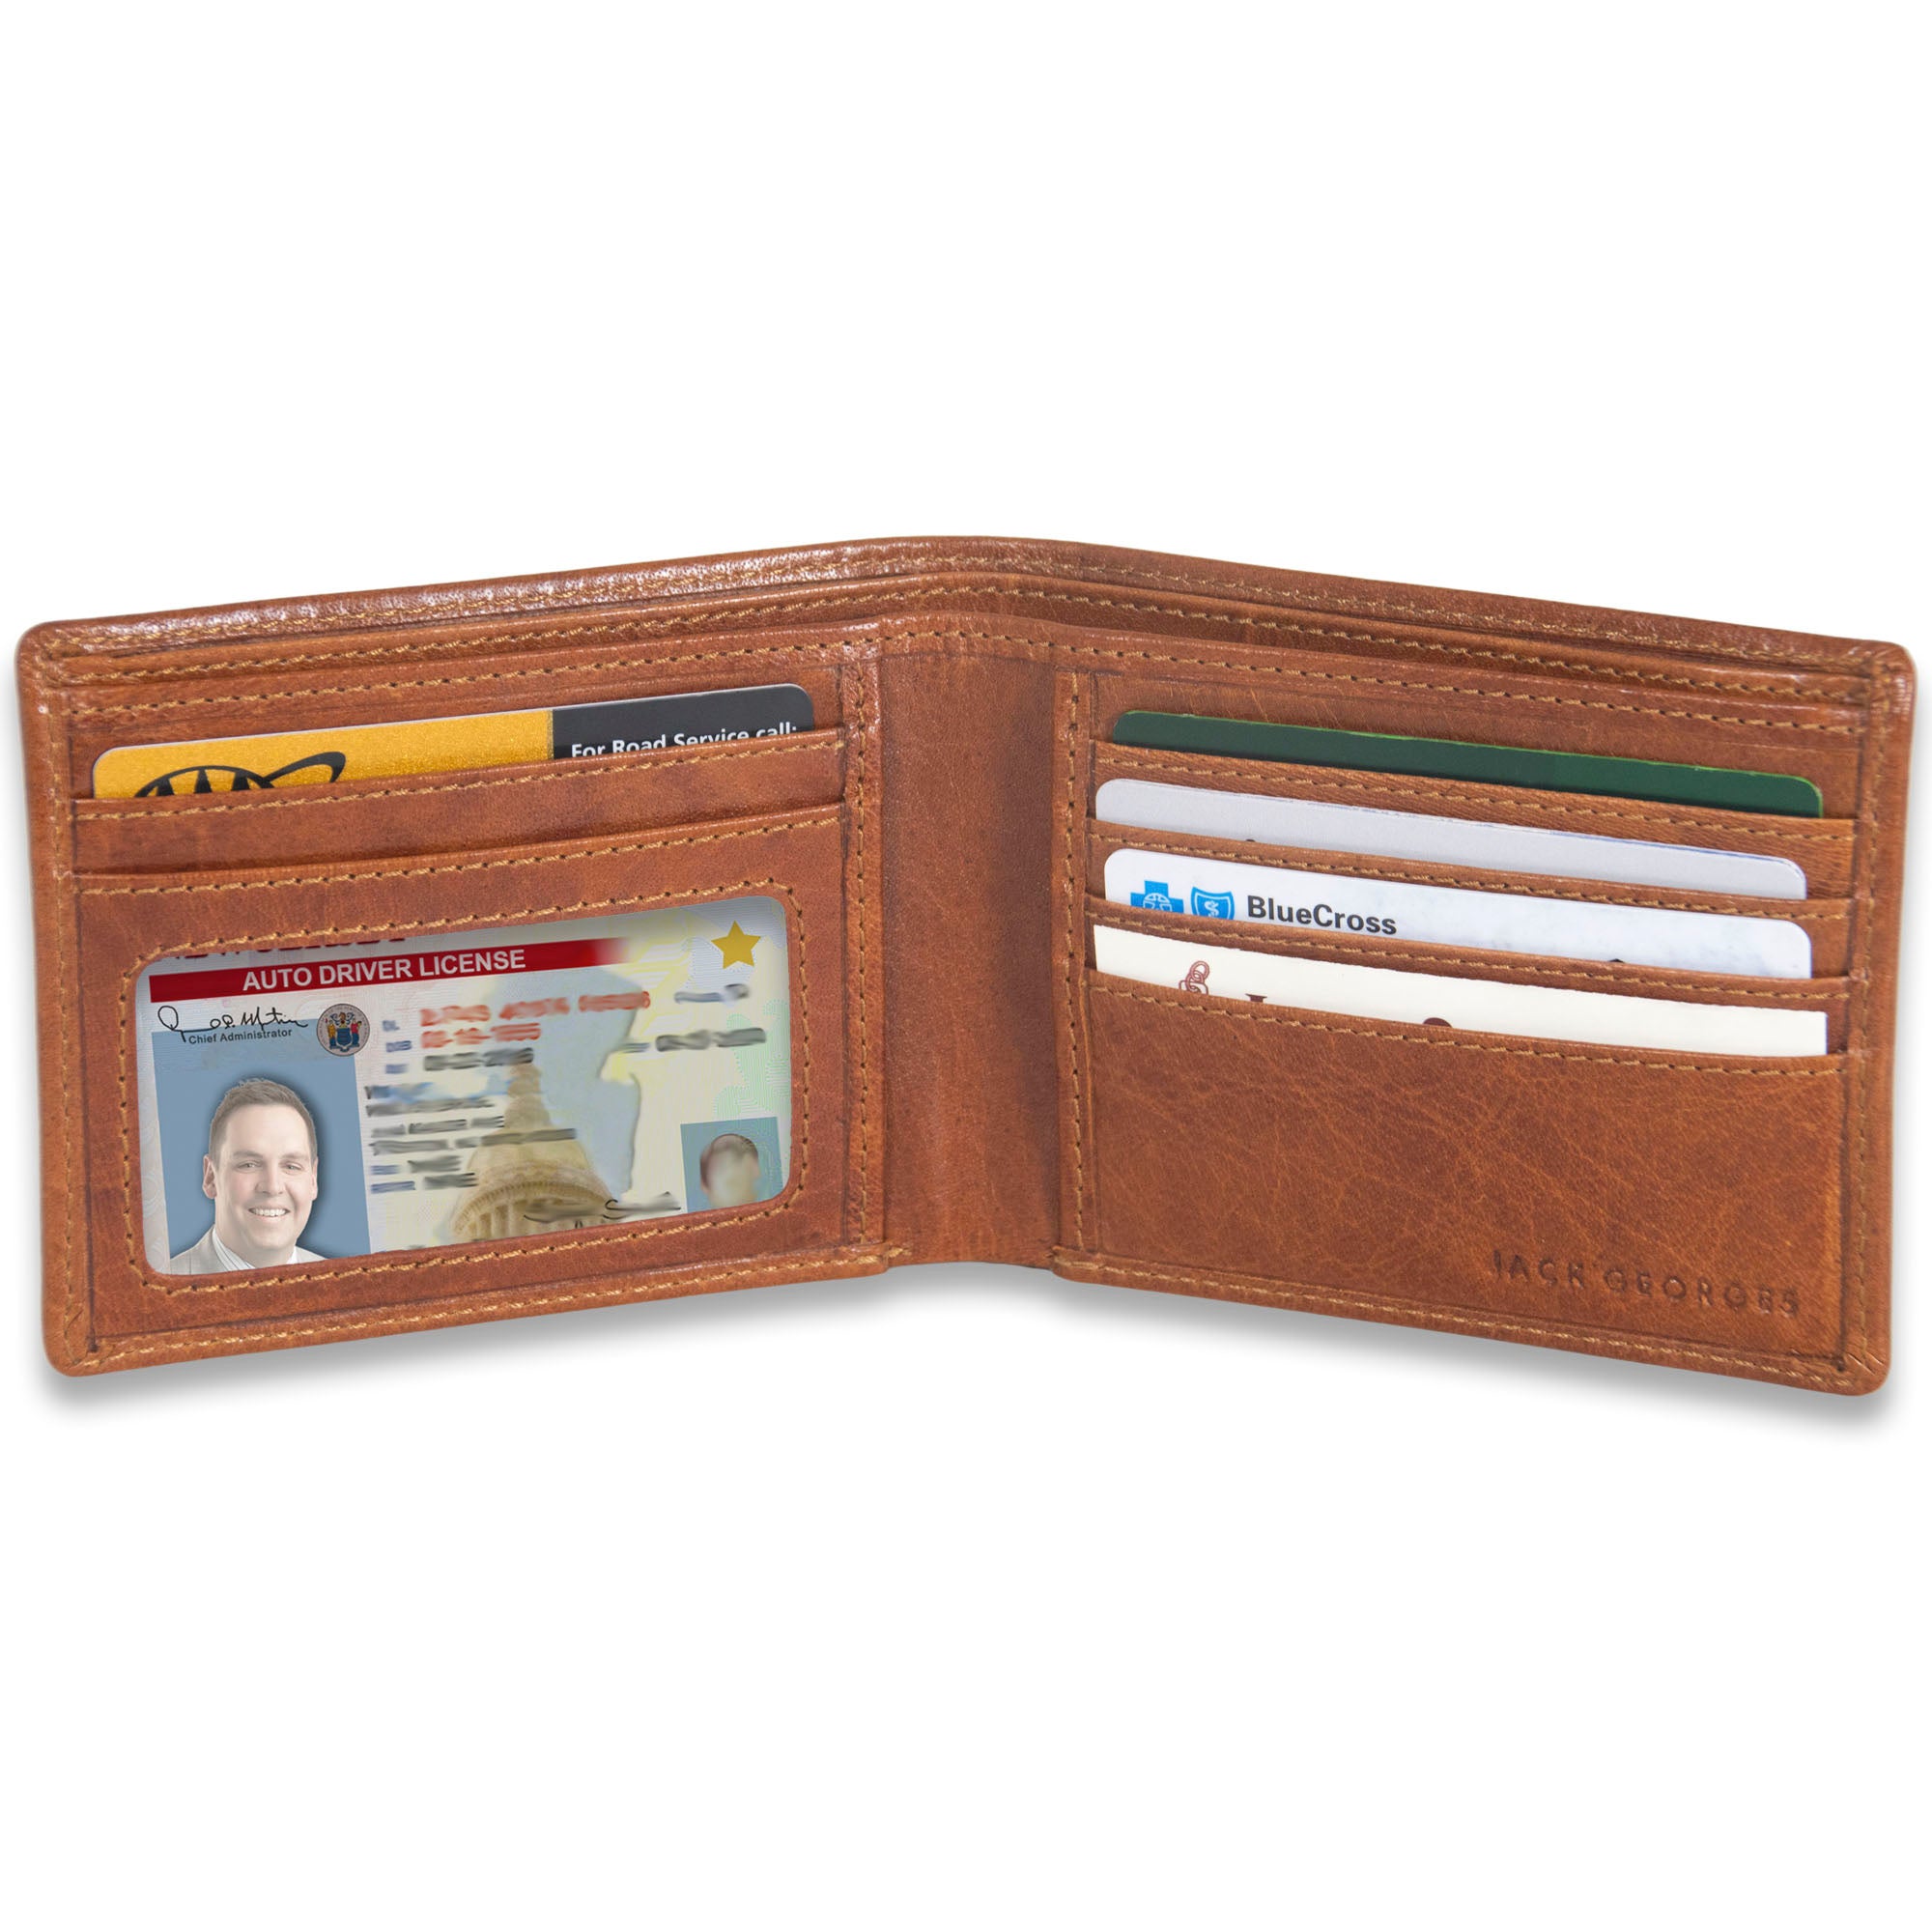 Voyager Bi-Fold Wallet w/Money Clip #7748 - Jack Georges